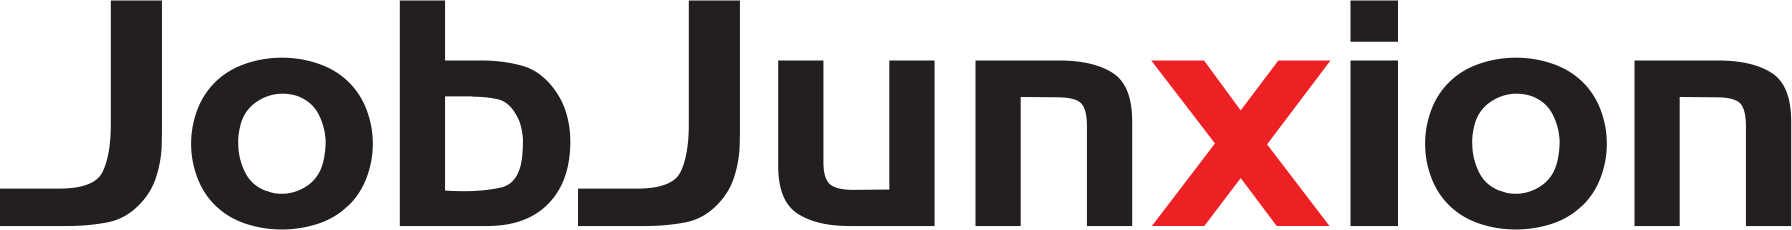 jobsunzion logo